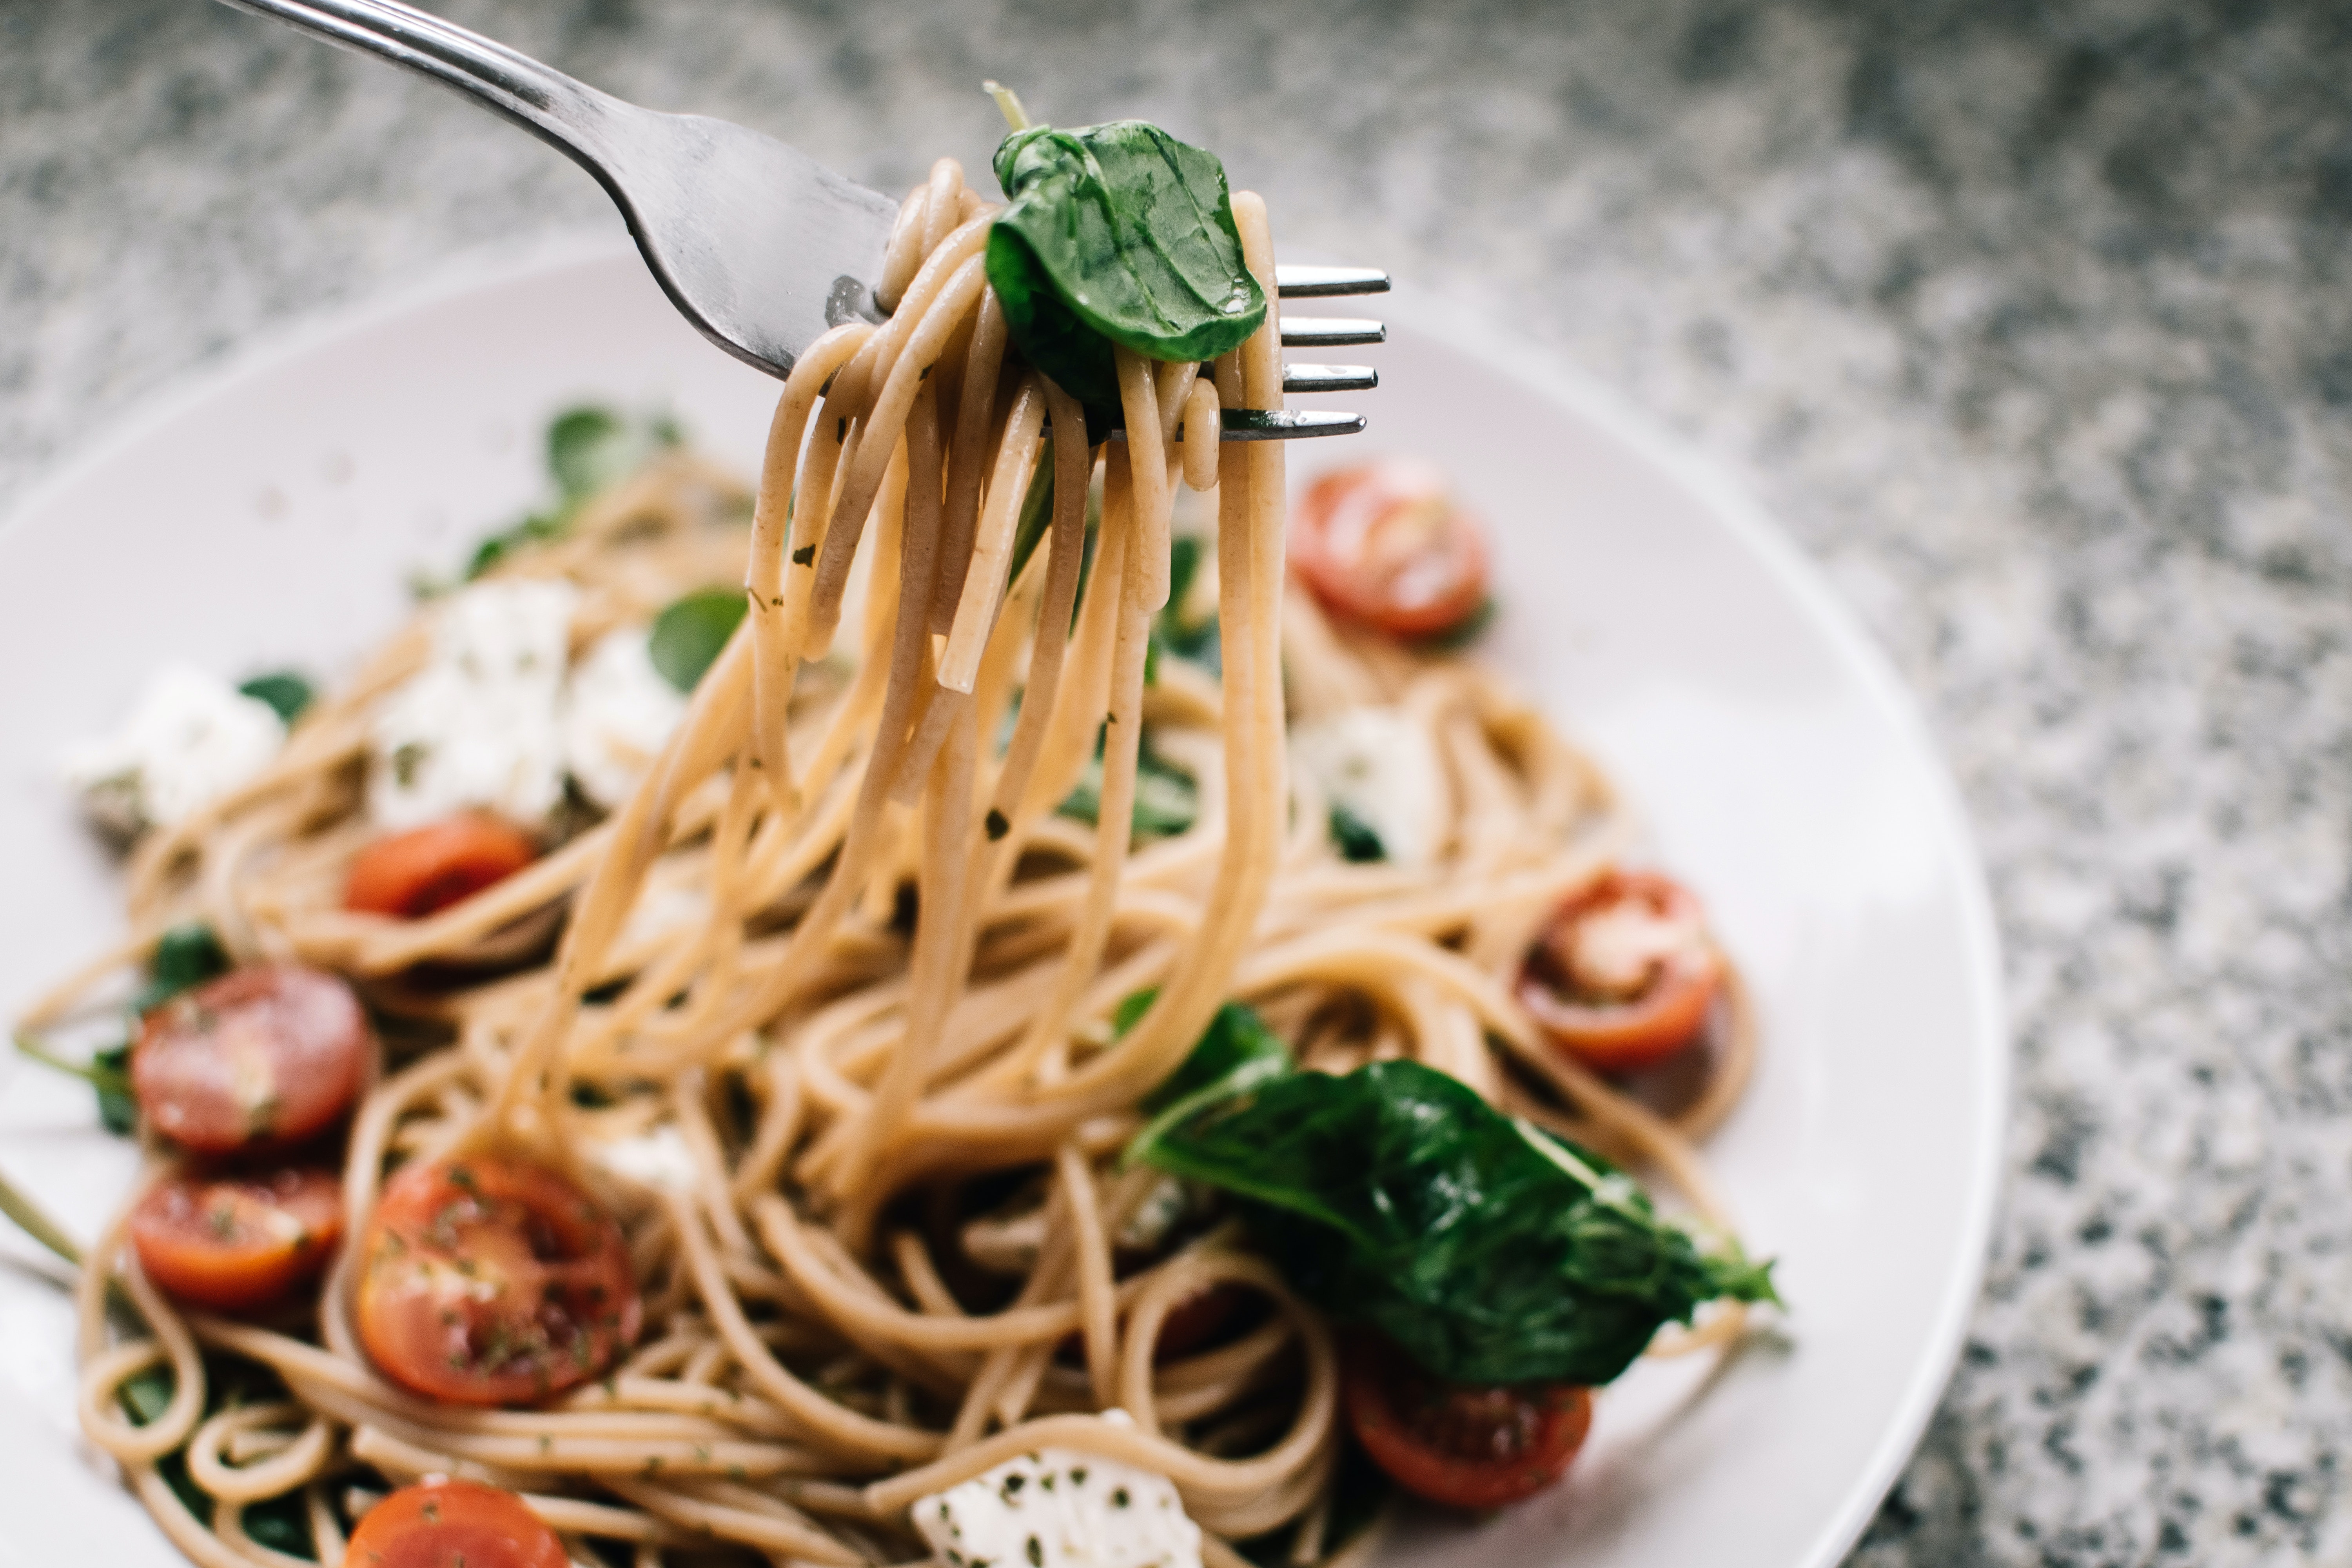 https://www.foodkonjac.com/news/ซึ่ง-pasta-is-best-for-weight-loss/